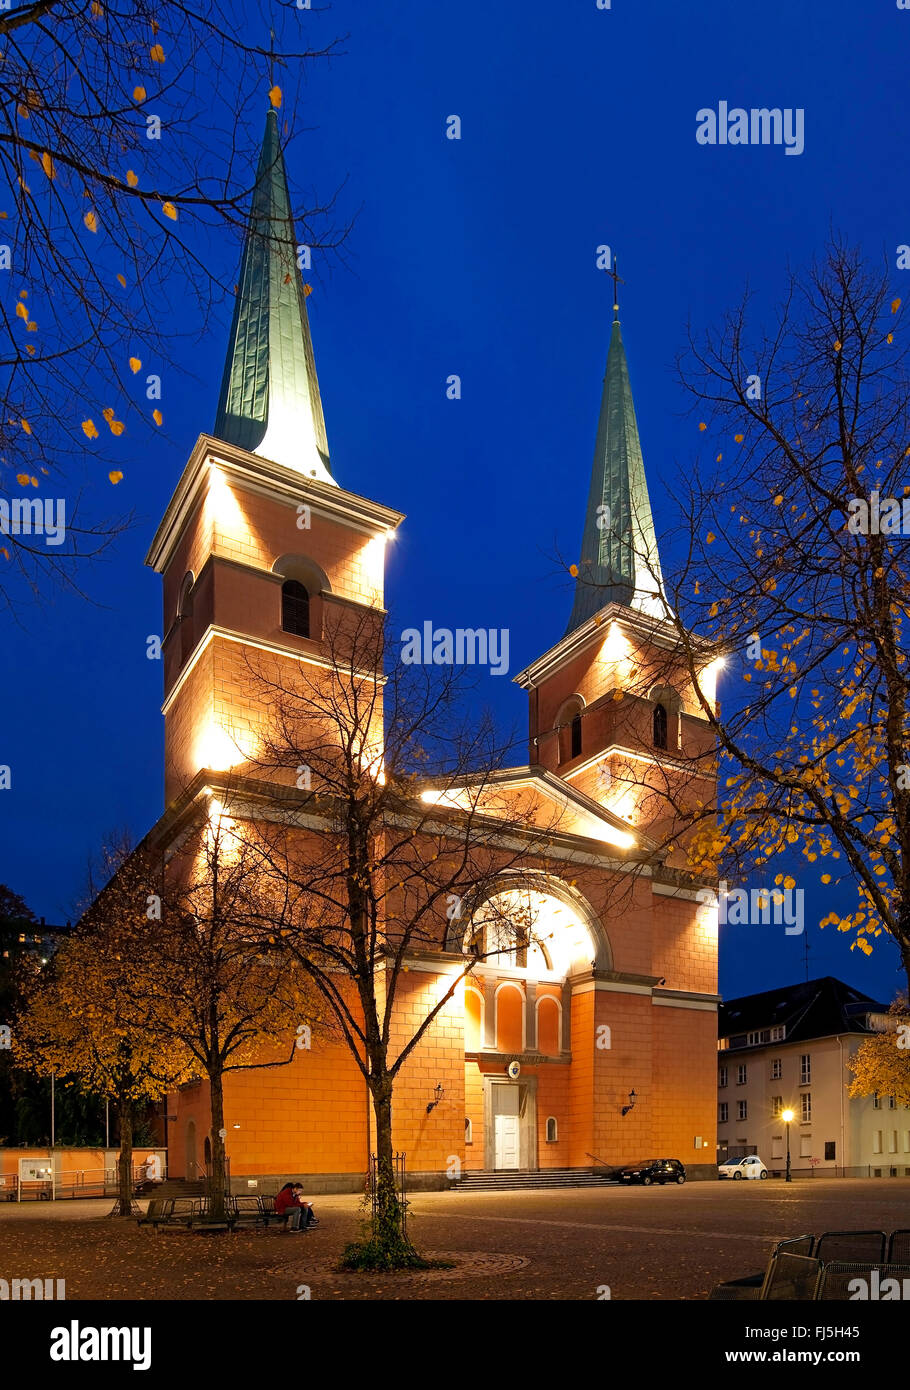 illuminated Sankt Laurentius church in Wuppertal Elberfeld in evening light, Germany, North Rhine-Westphalia, Bergisches Land, Wuppertal Stock Photo